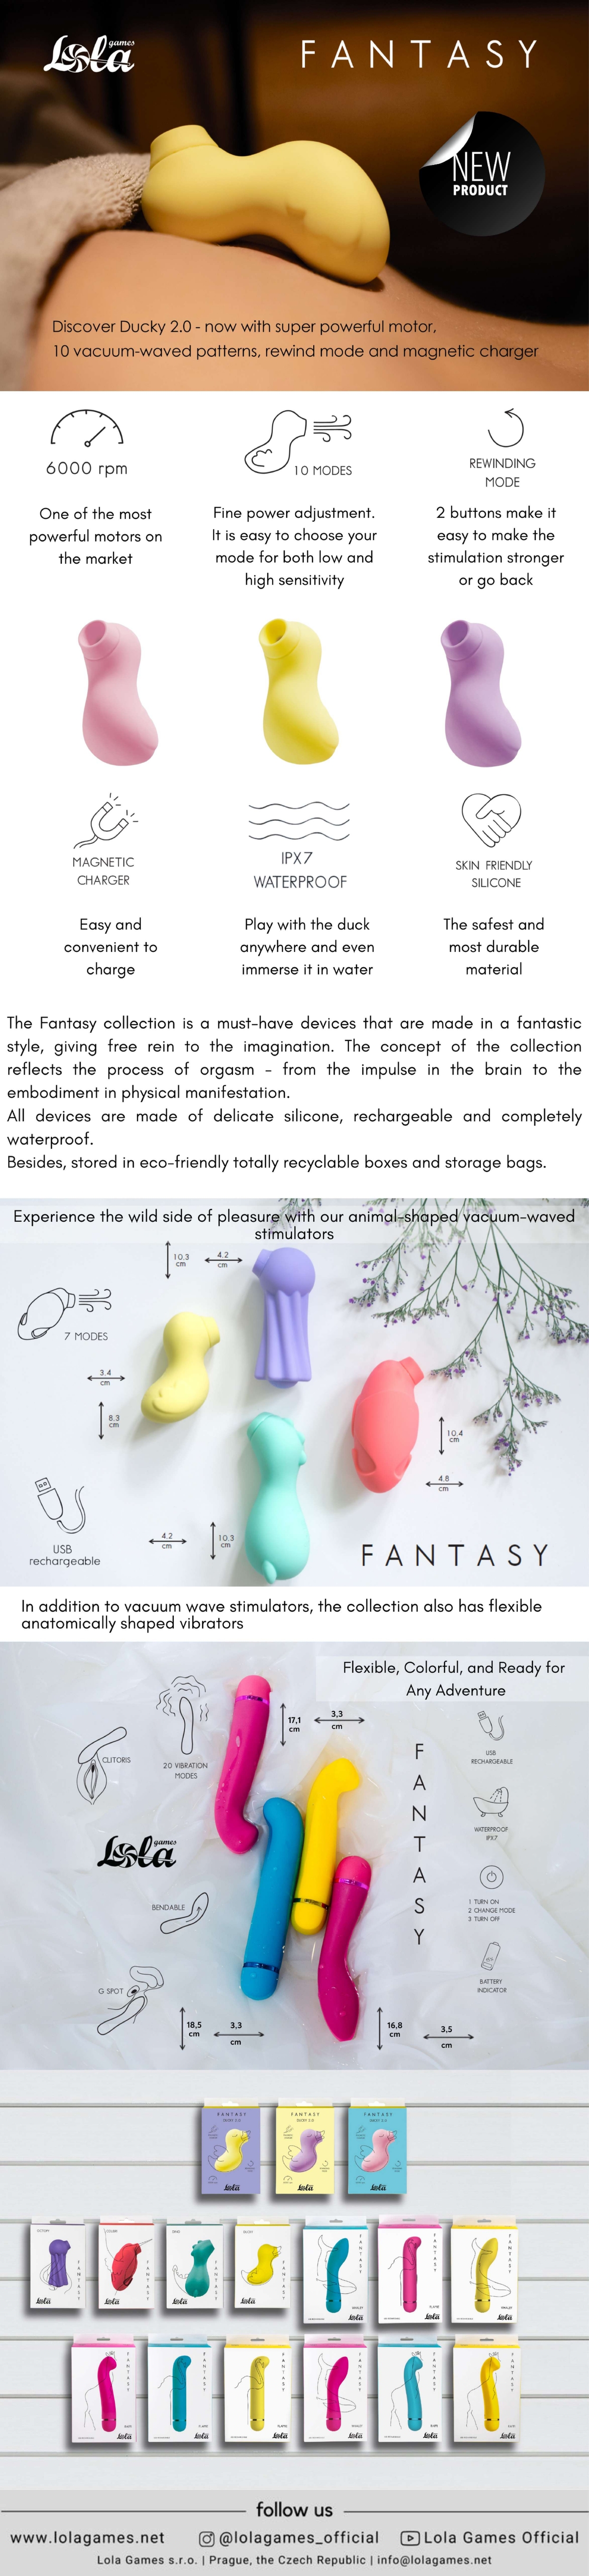 PDF presentation of About Fantasy